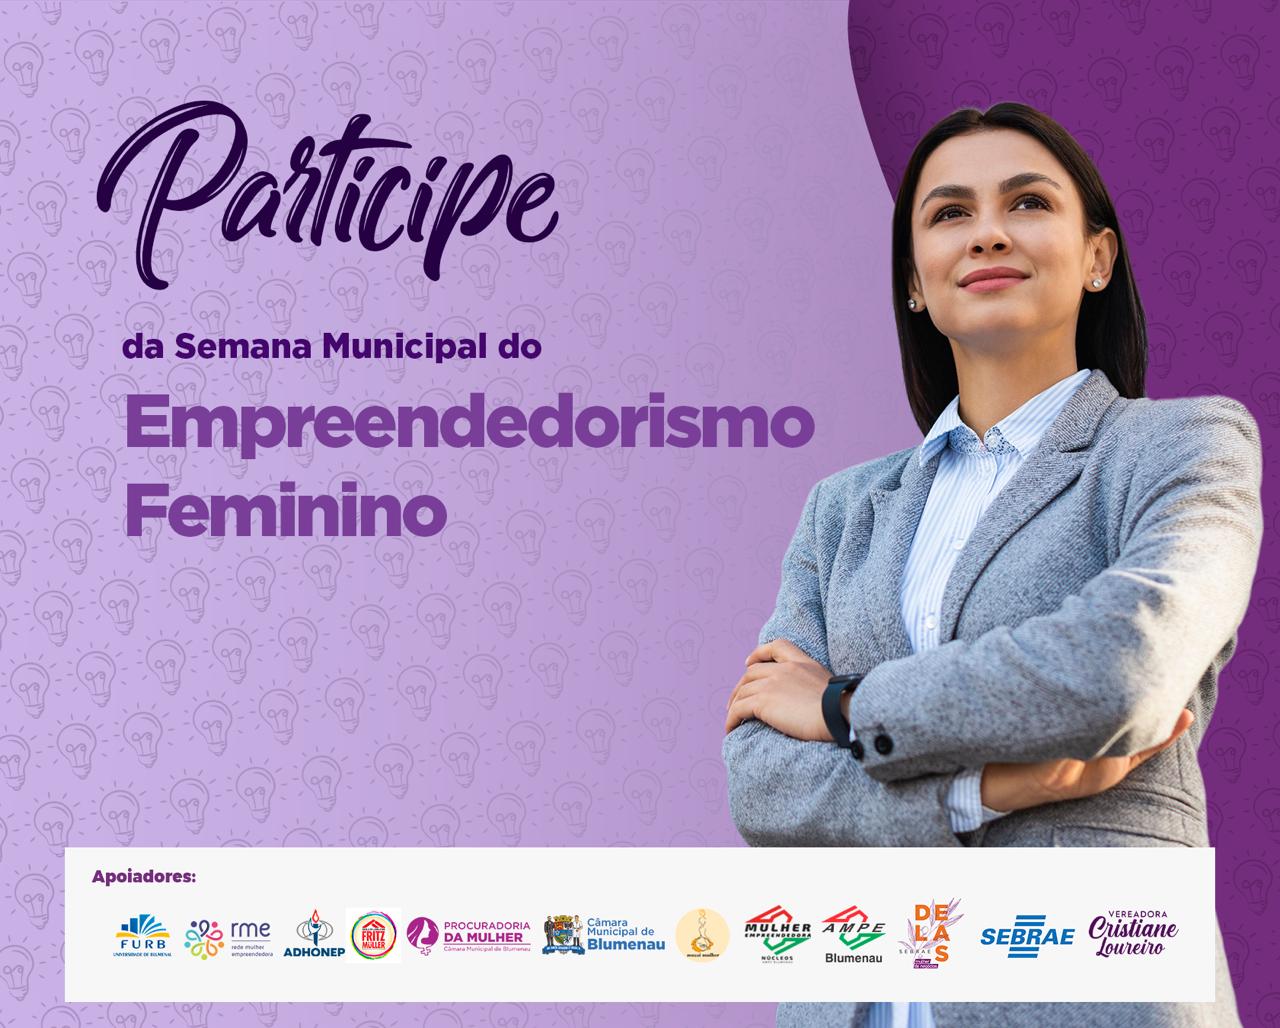 Câmara de Vereadores sedia abertura da 3ª Semana Municipal do Empreendedorismo Feminino nesta segunda-feira (20)